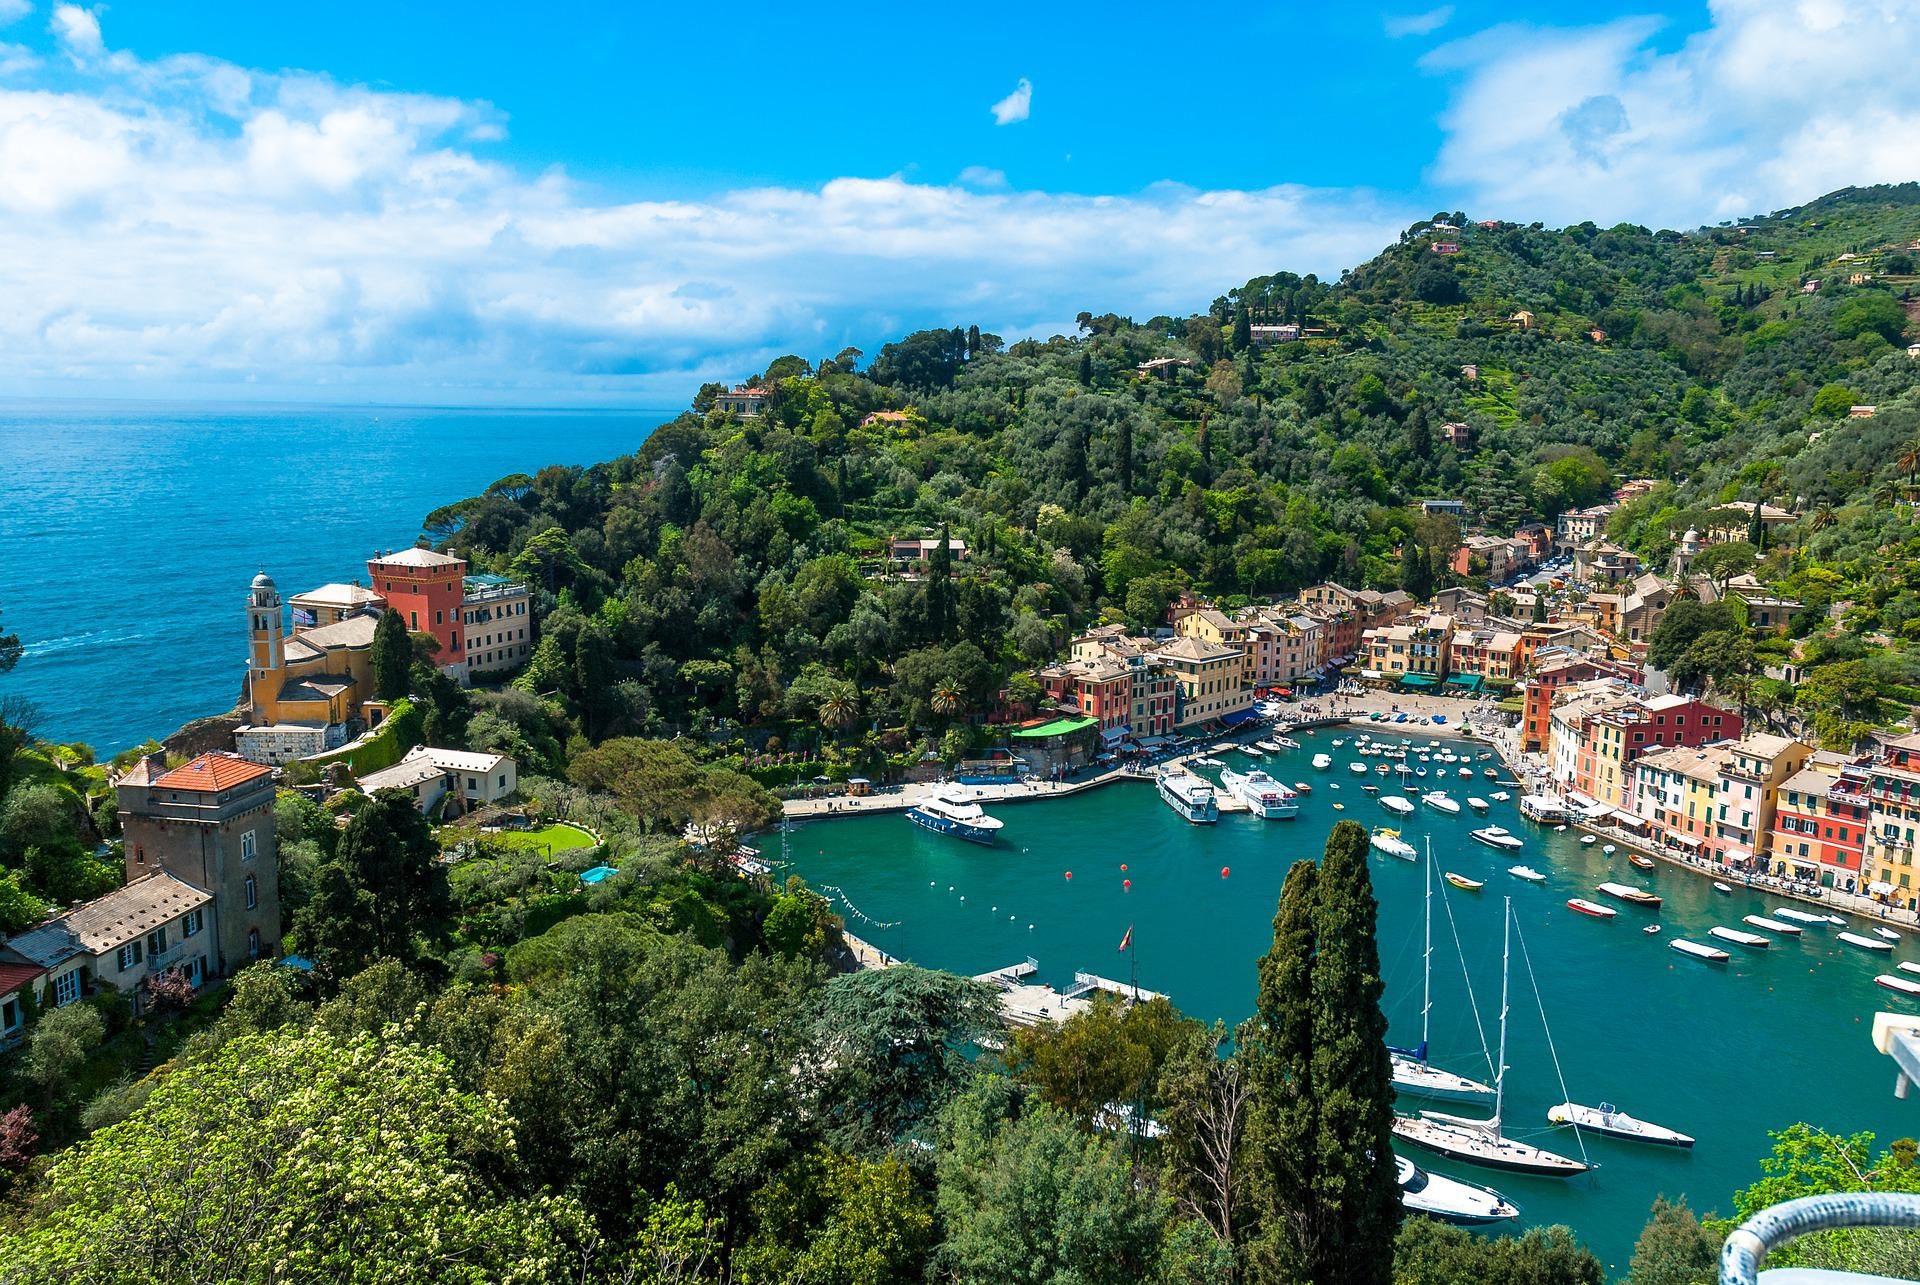 The harbor of Portofino in Italy.